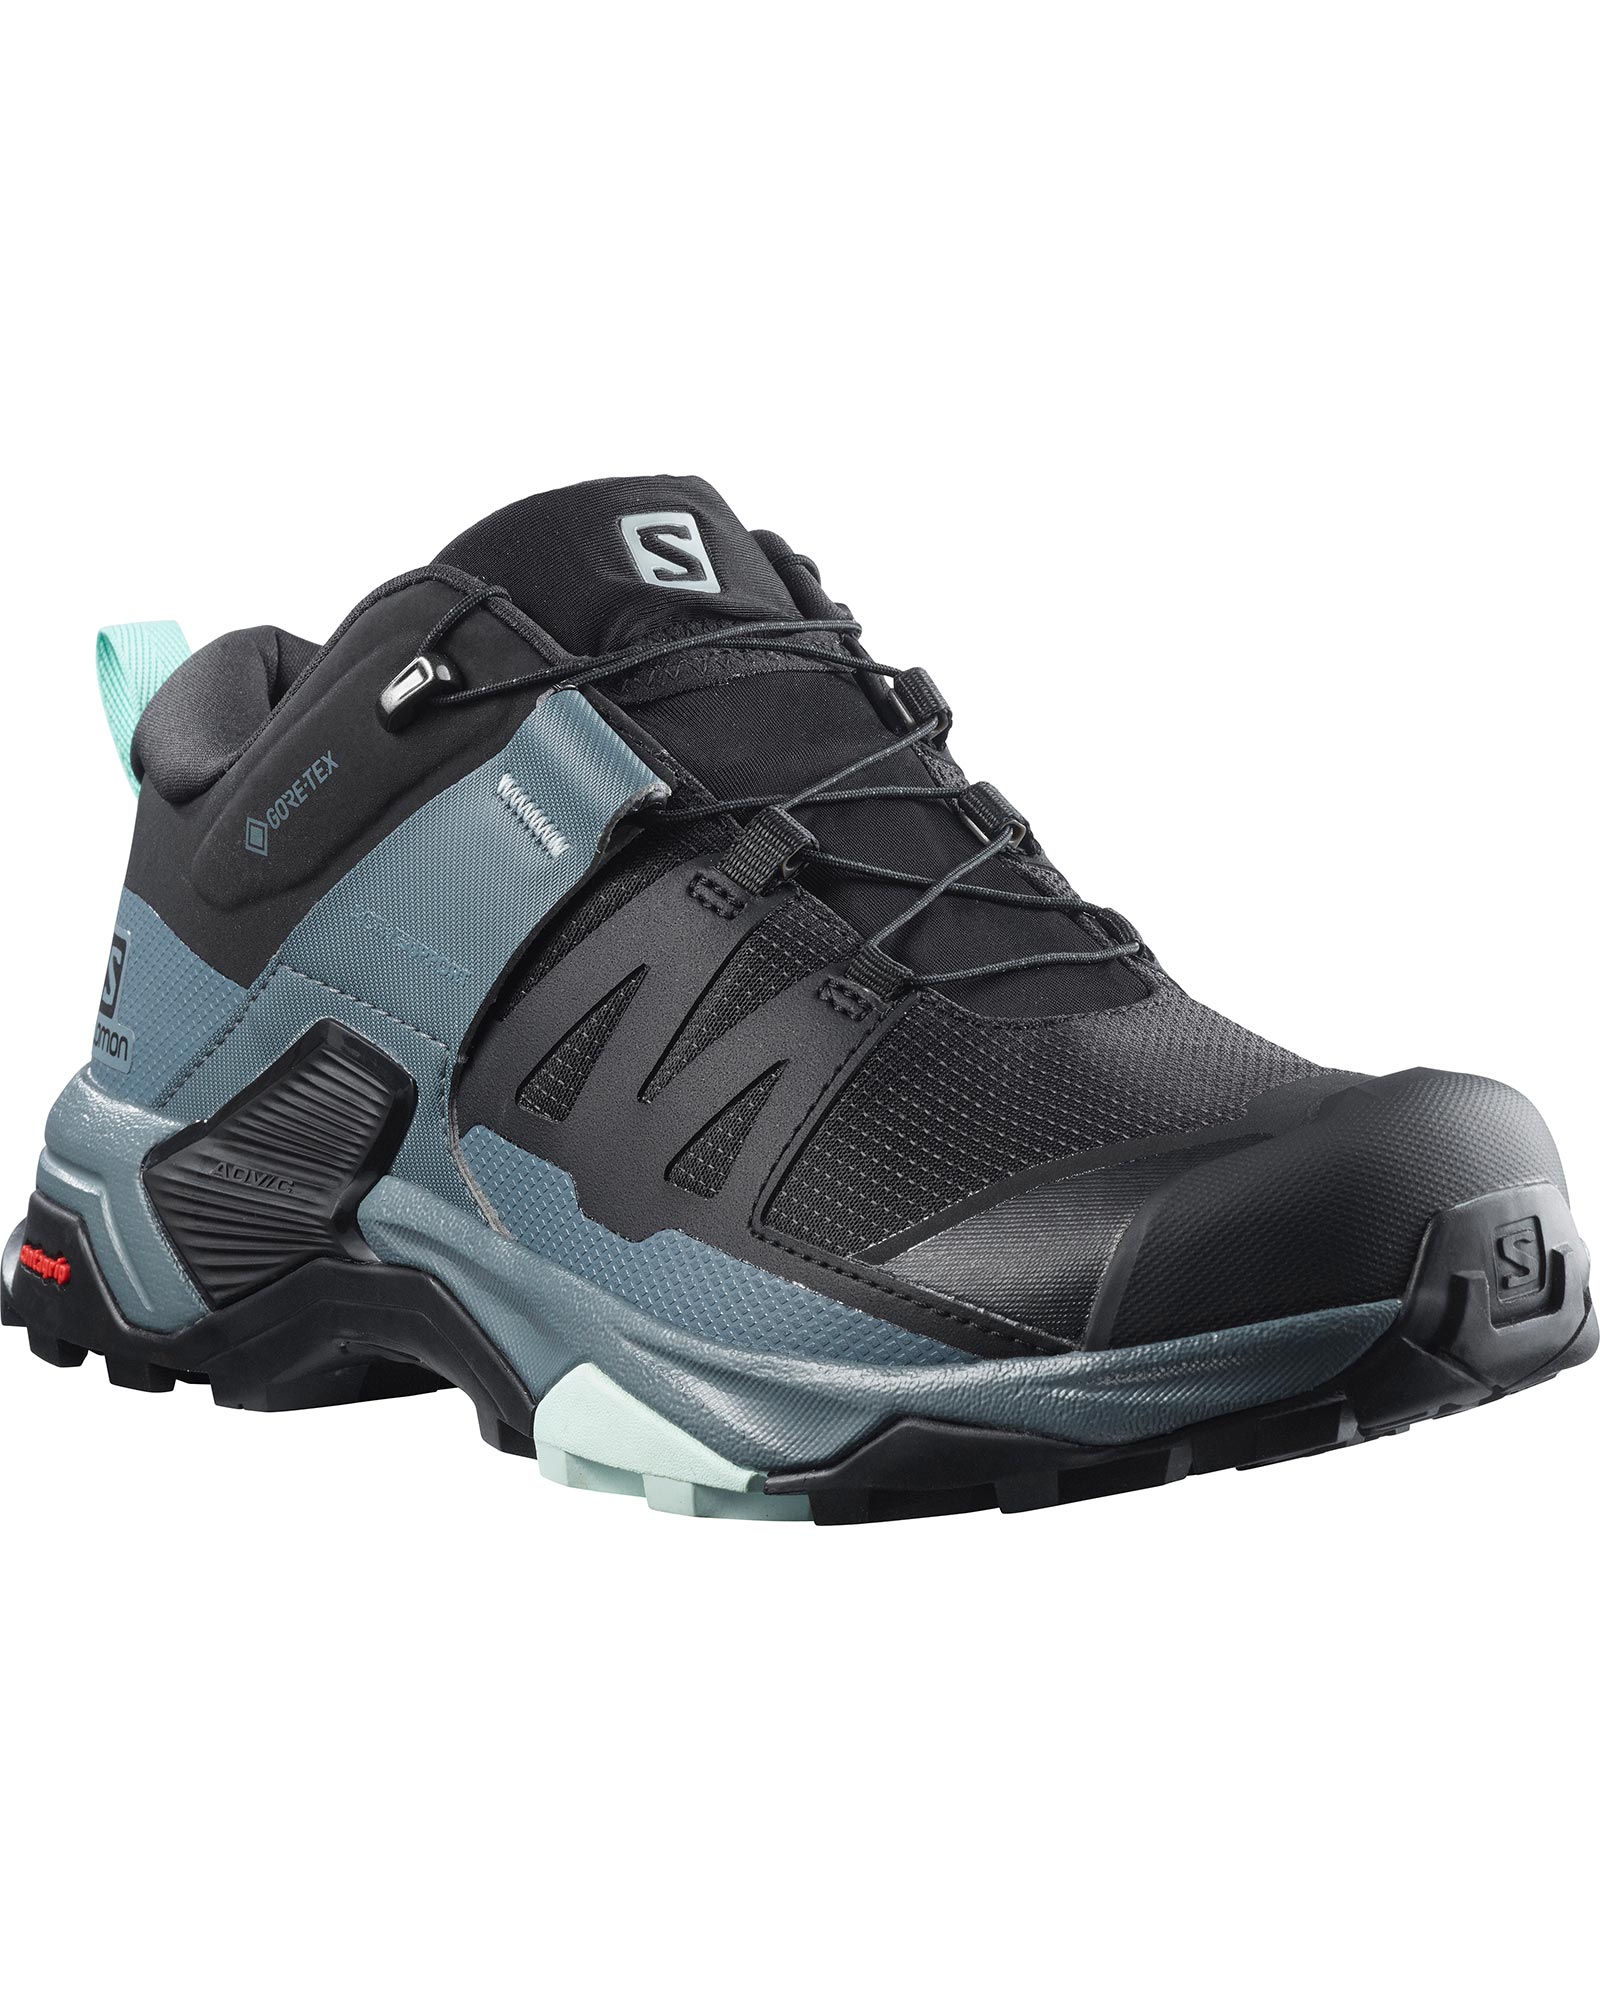 Salomon X Ultra 4 GORE TEX Women’s Shoes - Black/Stormy Weather/Opal Blue UK 7.5